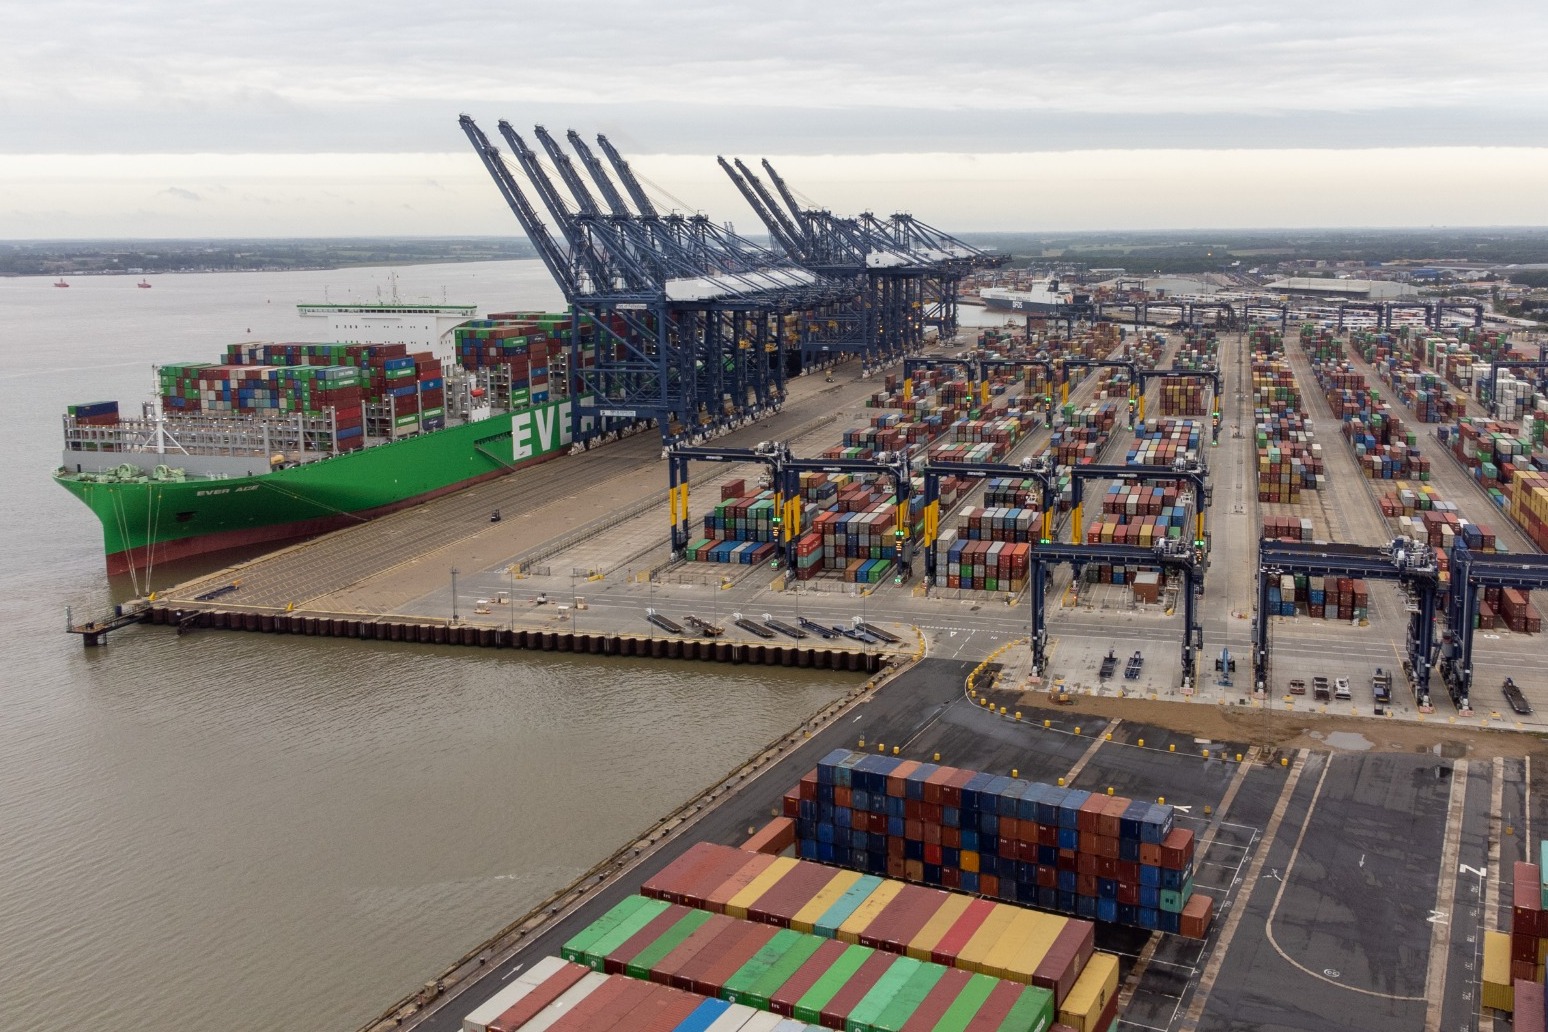 Worlds largest cargo ship arrives in UK port